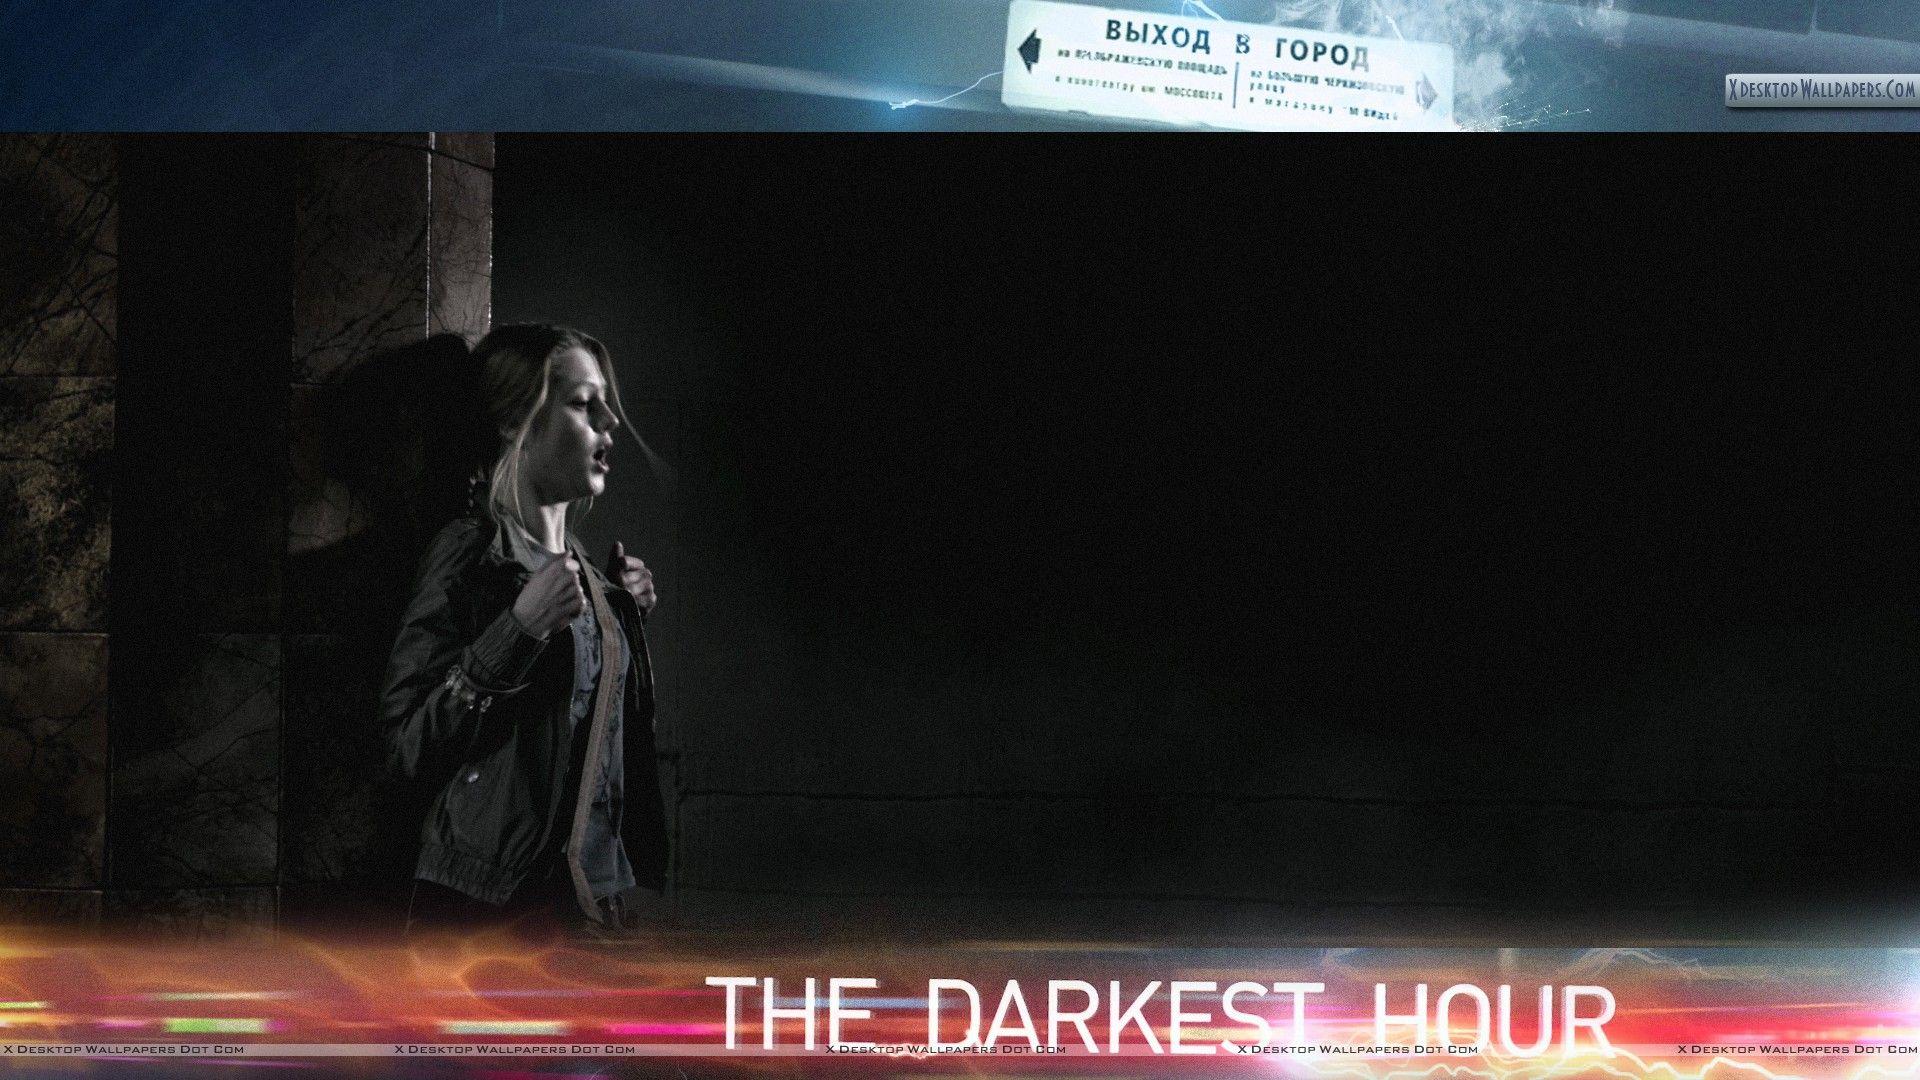 The Darkest Hour Wallpaper, Photo & Image in HD